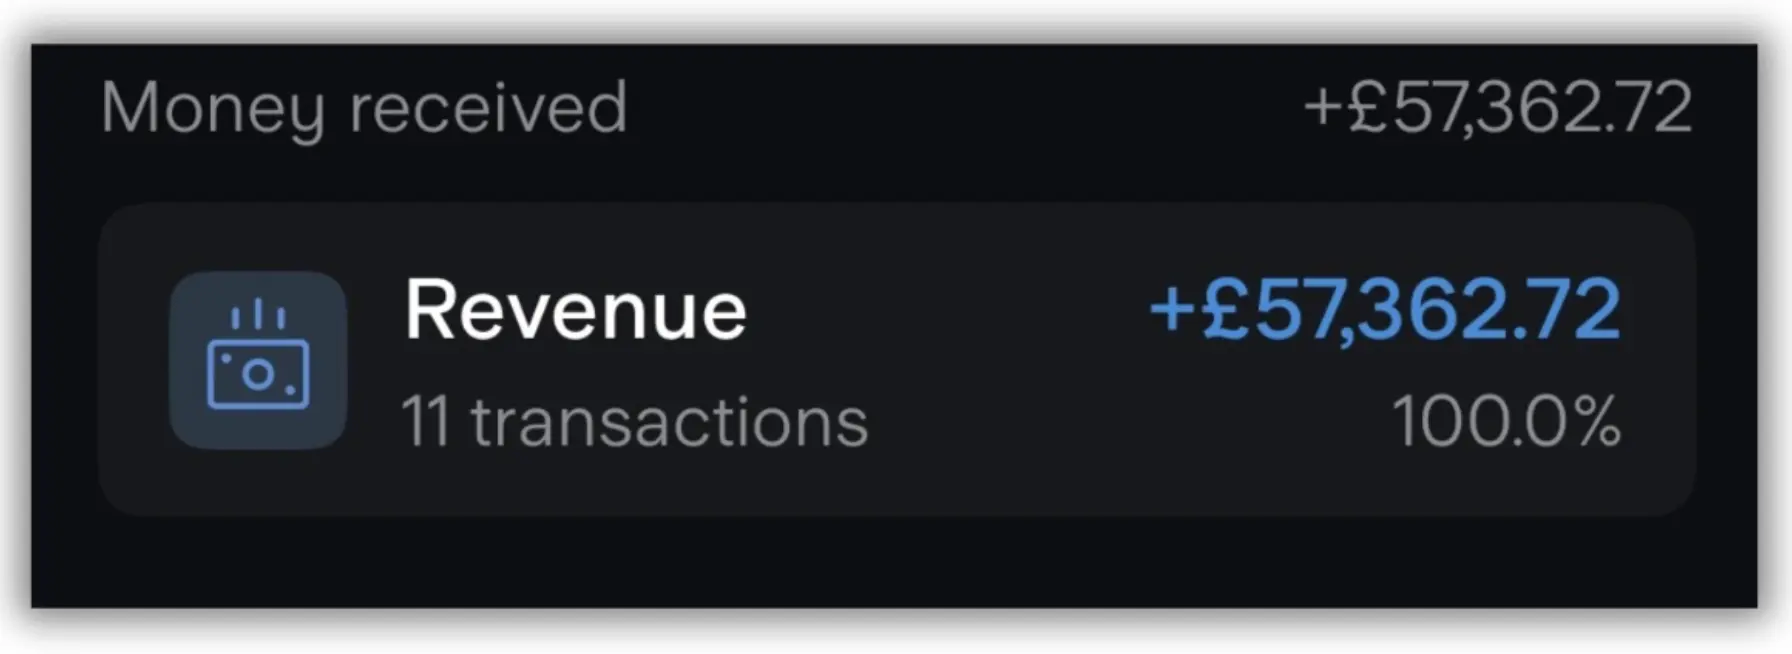 The Growth Partner revenue screenshot